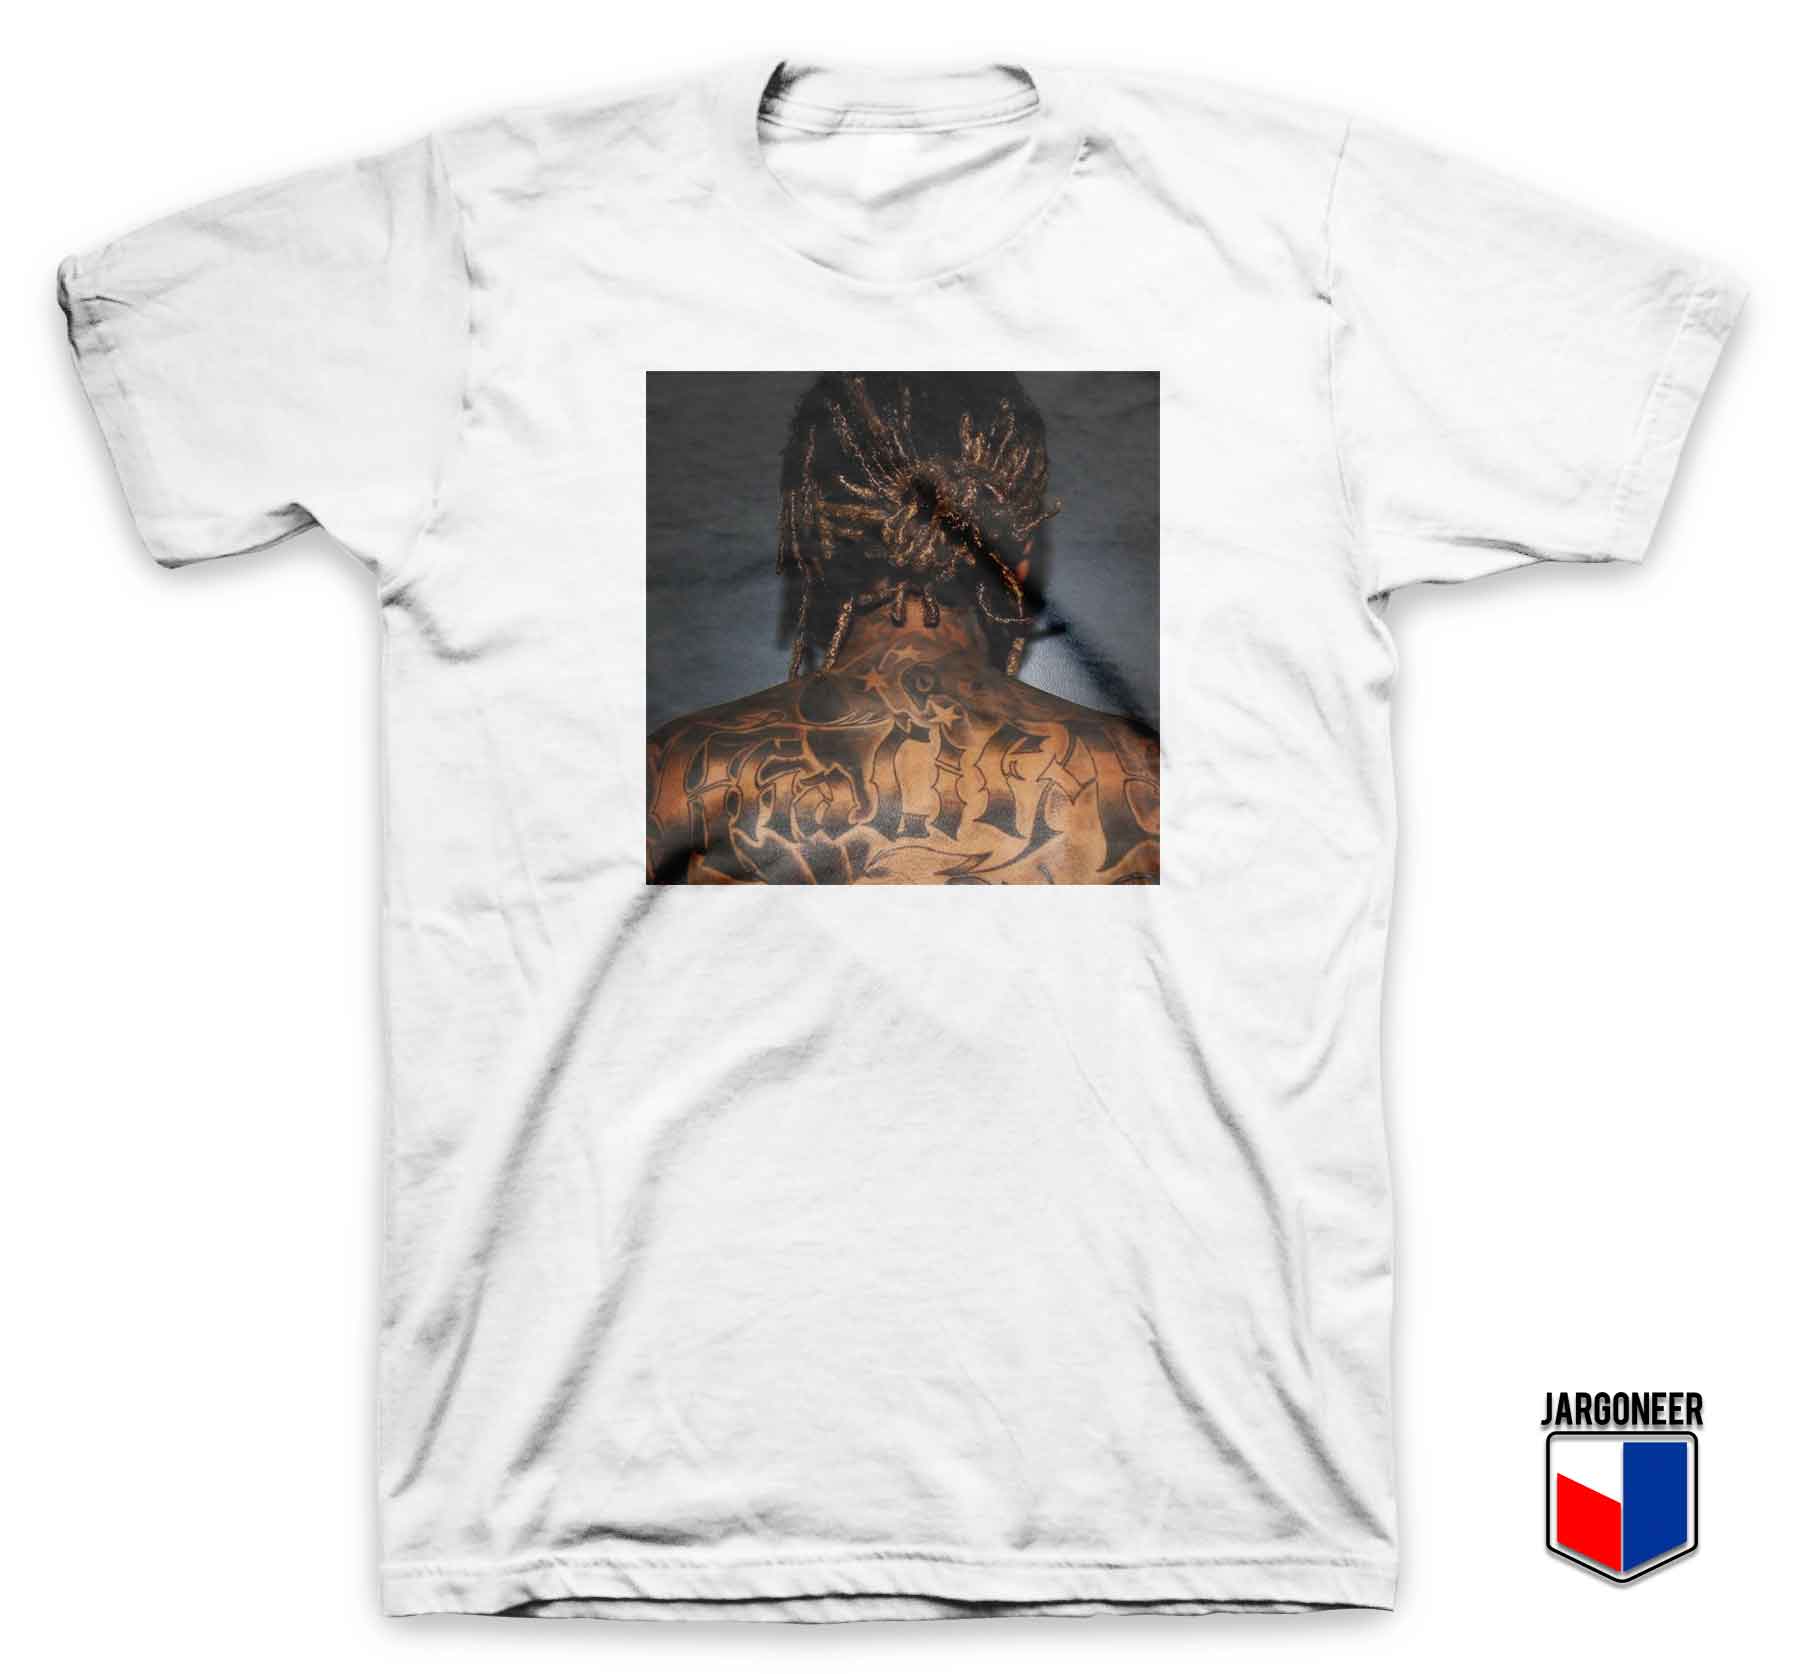 Wiz Khalifa Tattooed Cover - Shop Unique Graphic Cool Shirt Designs